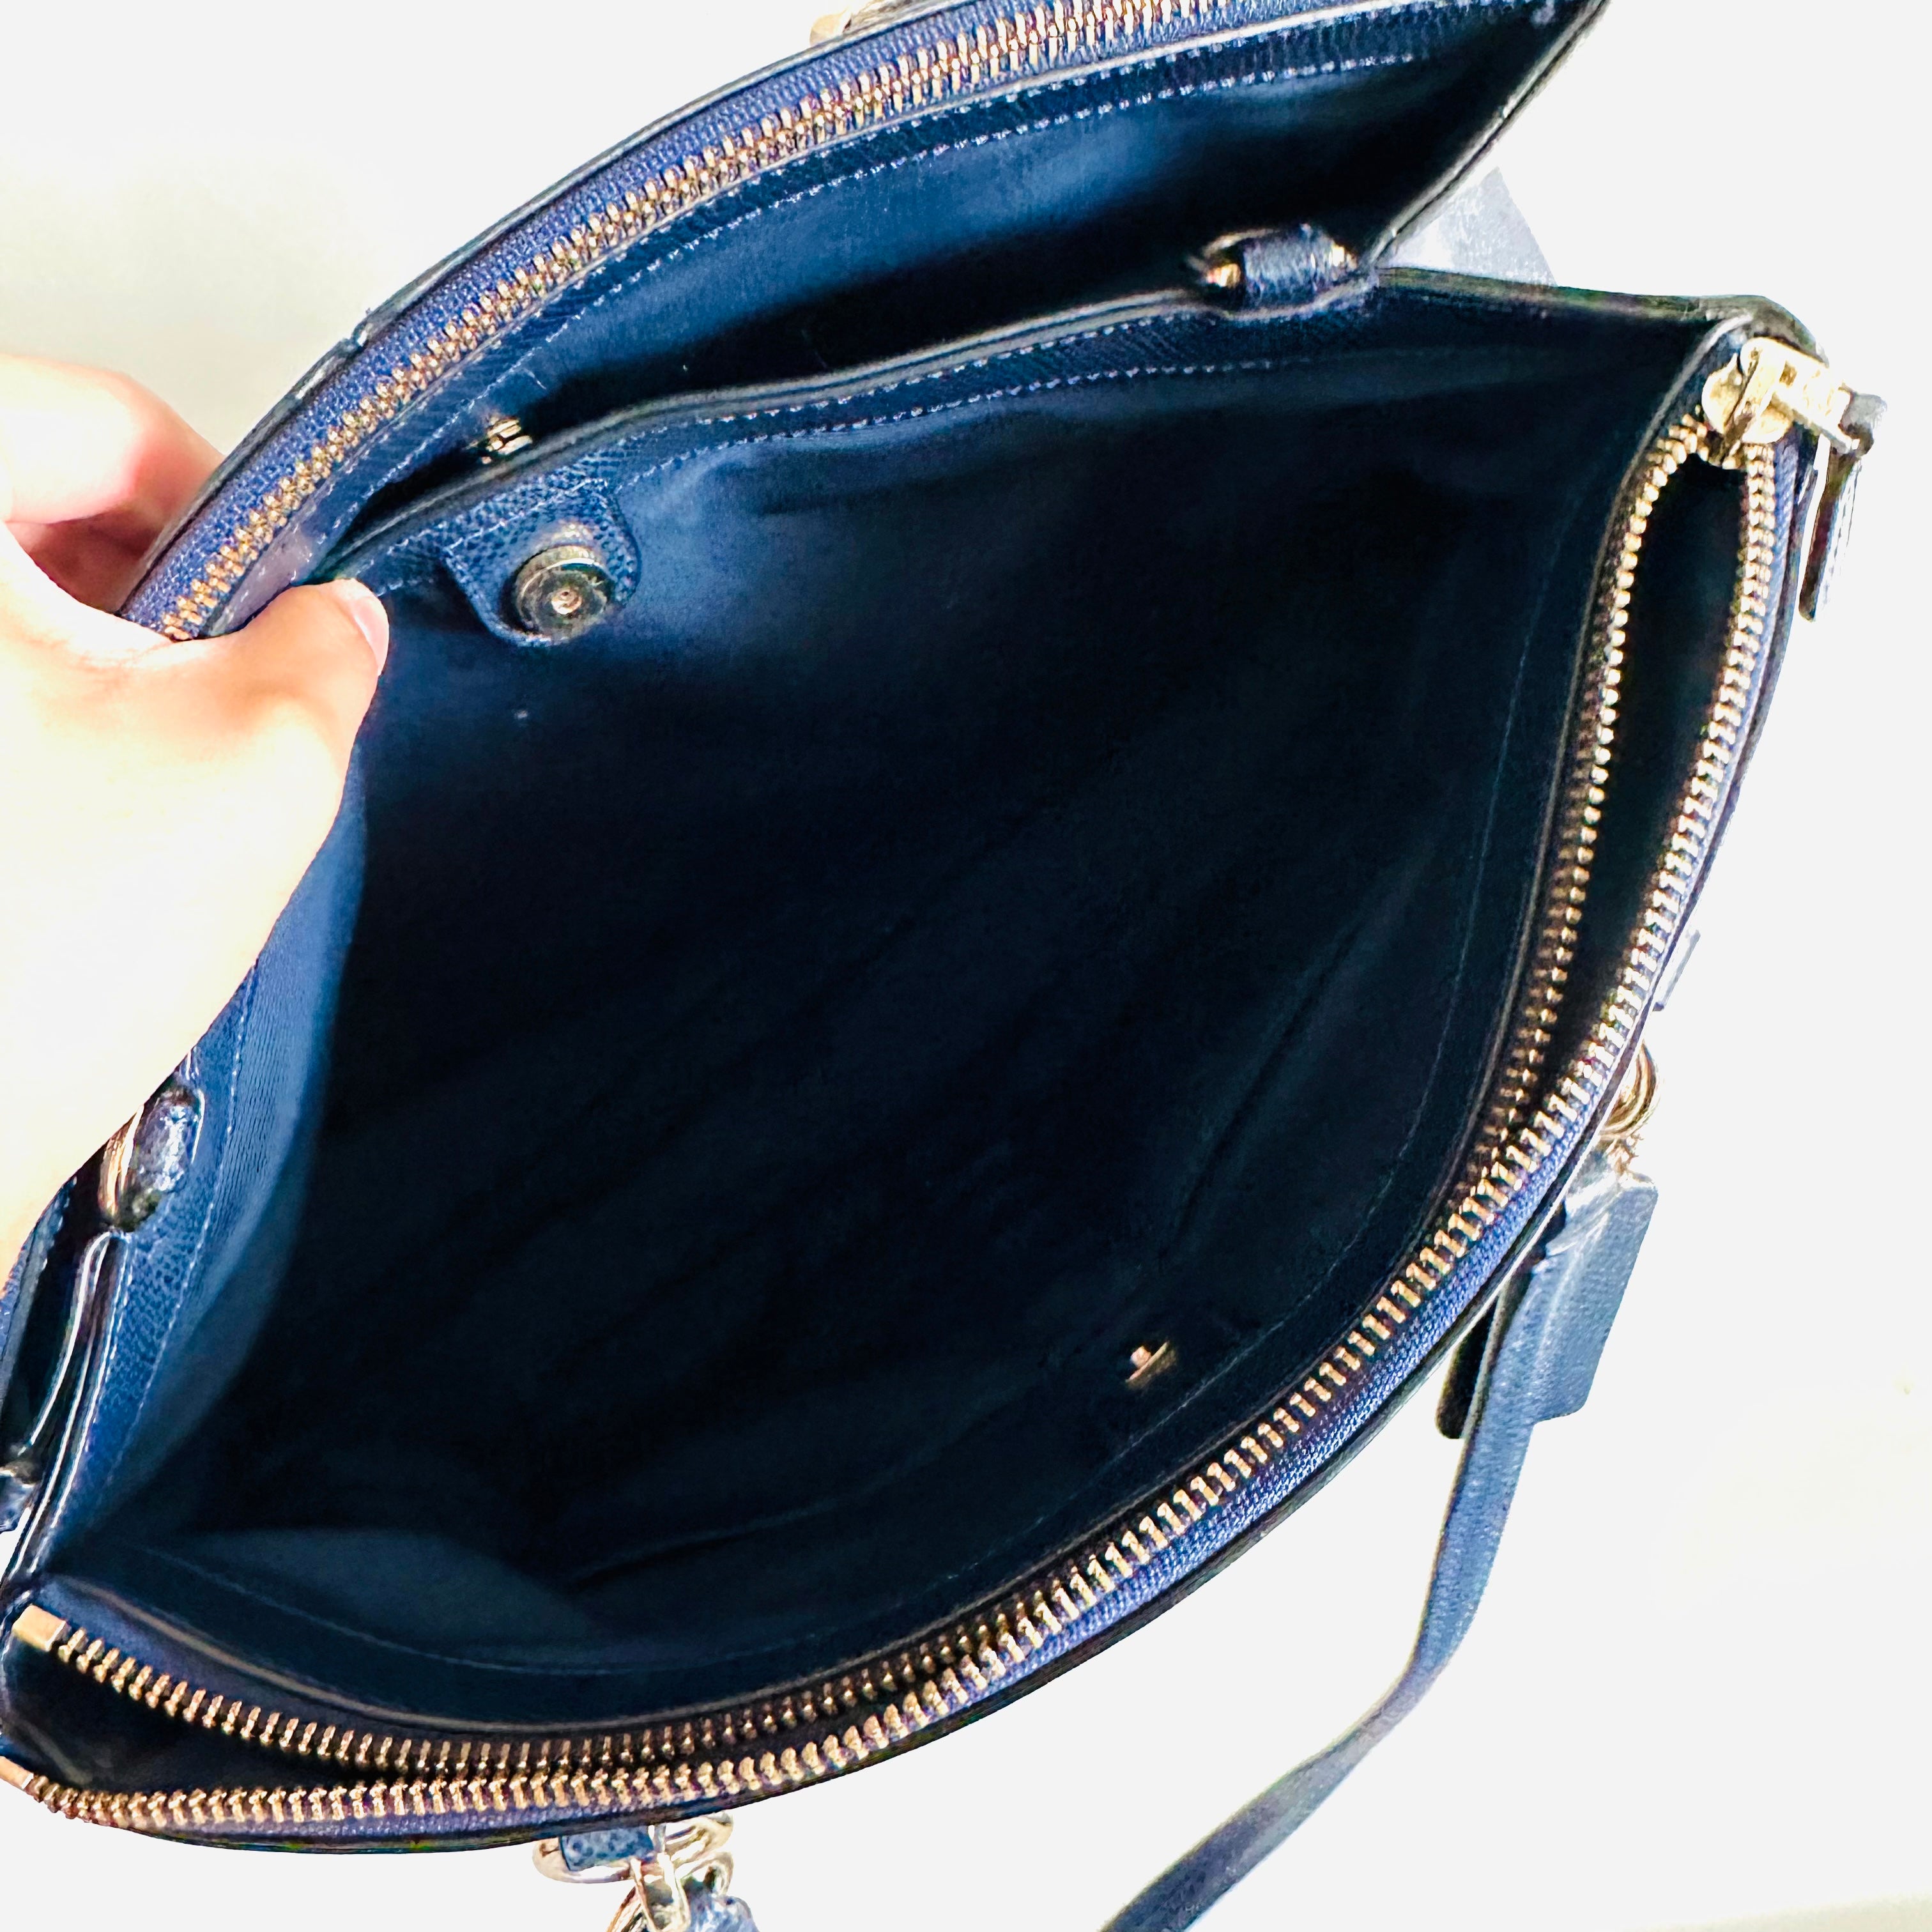 Coach purse navy blue and black authentic - Depop